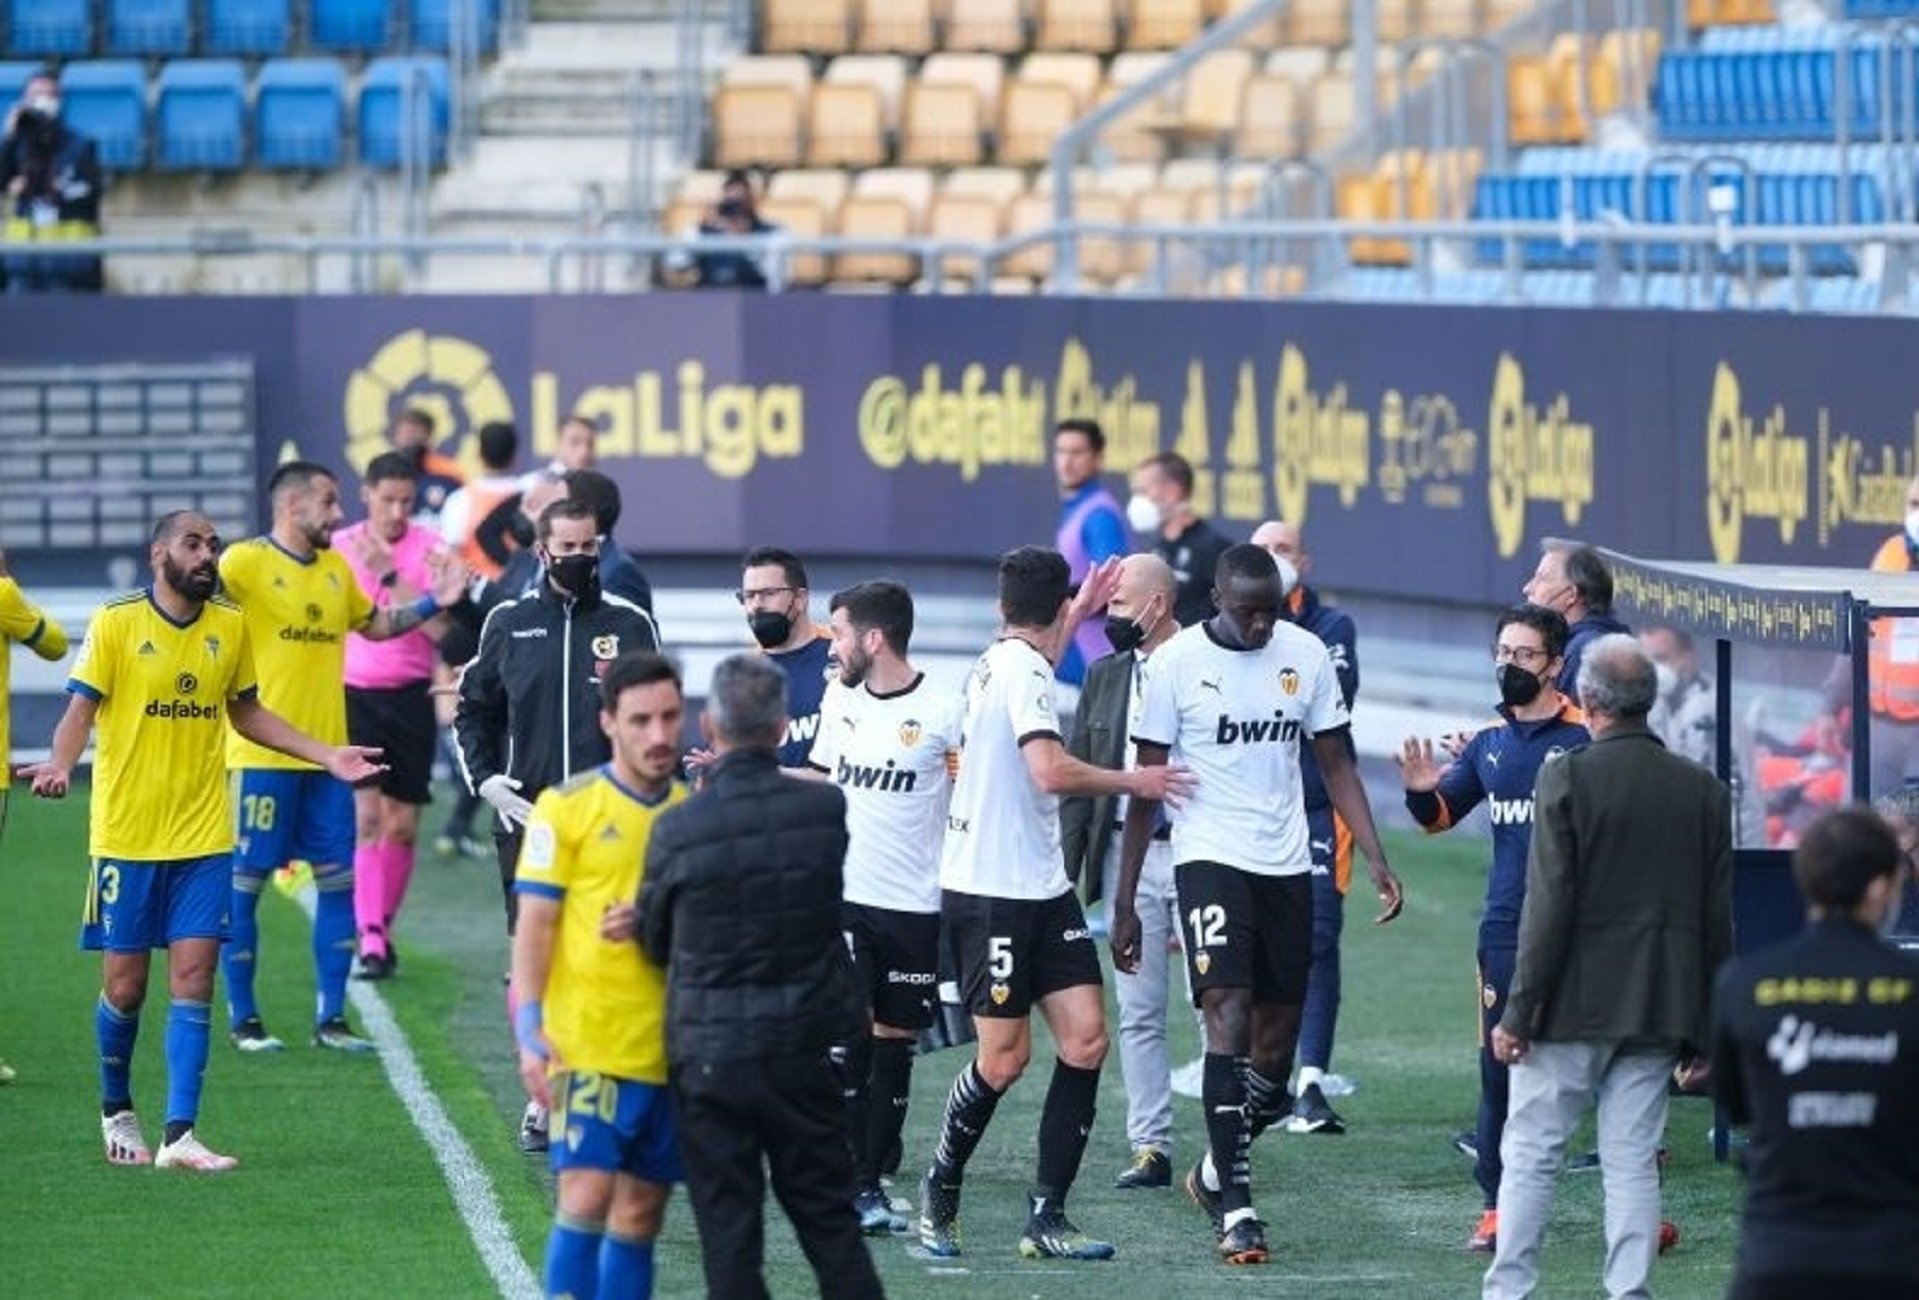 Audio emerges of racist insult in Cádiz-Valencia football match